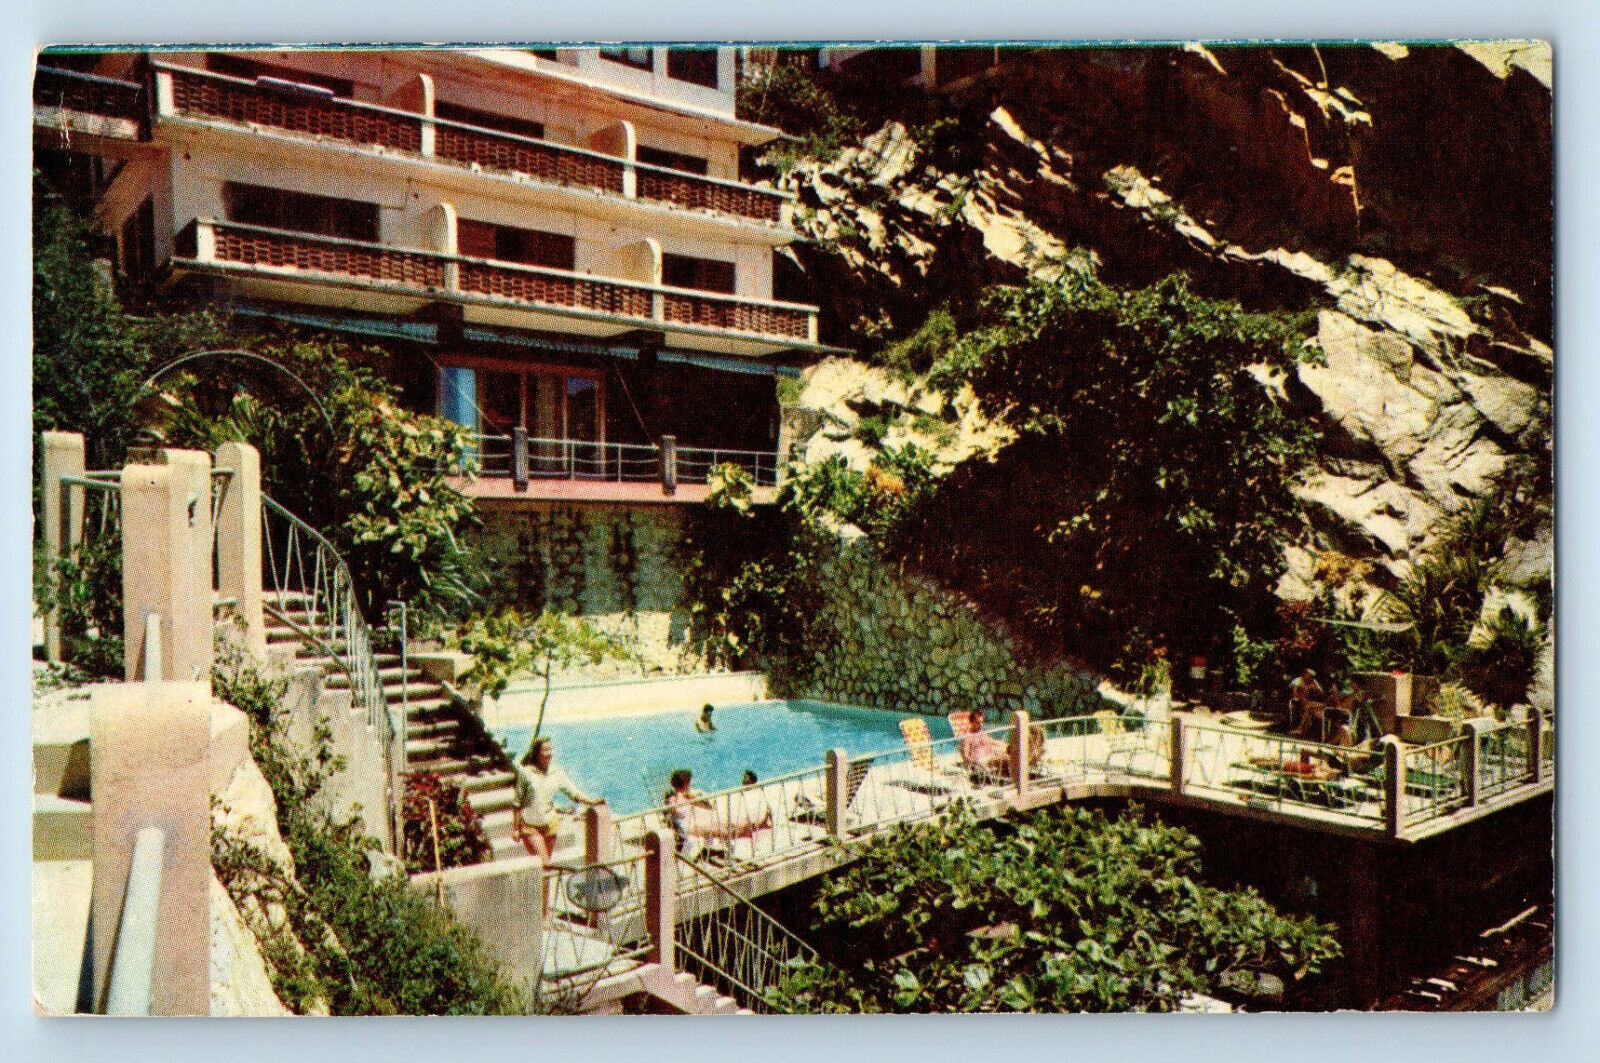 Acapulco Guerrero Mexico Postcard Hotel Mirador Tropical Swimming Pool 1957